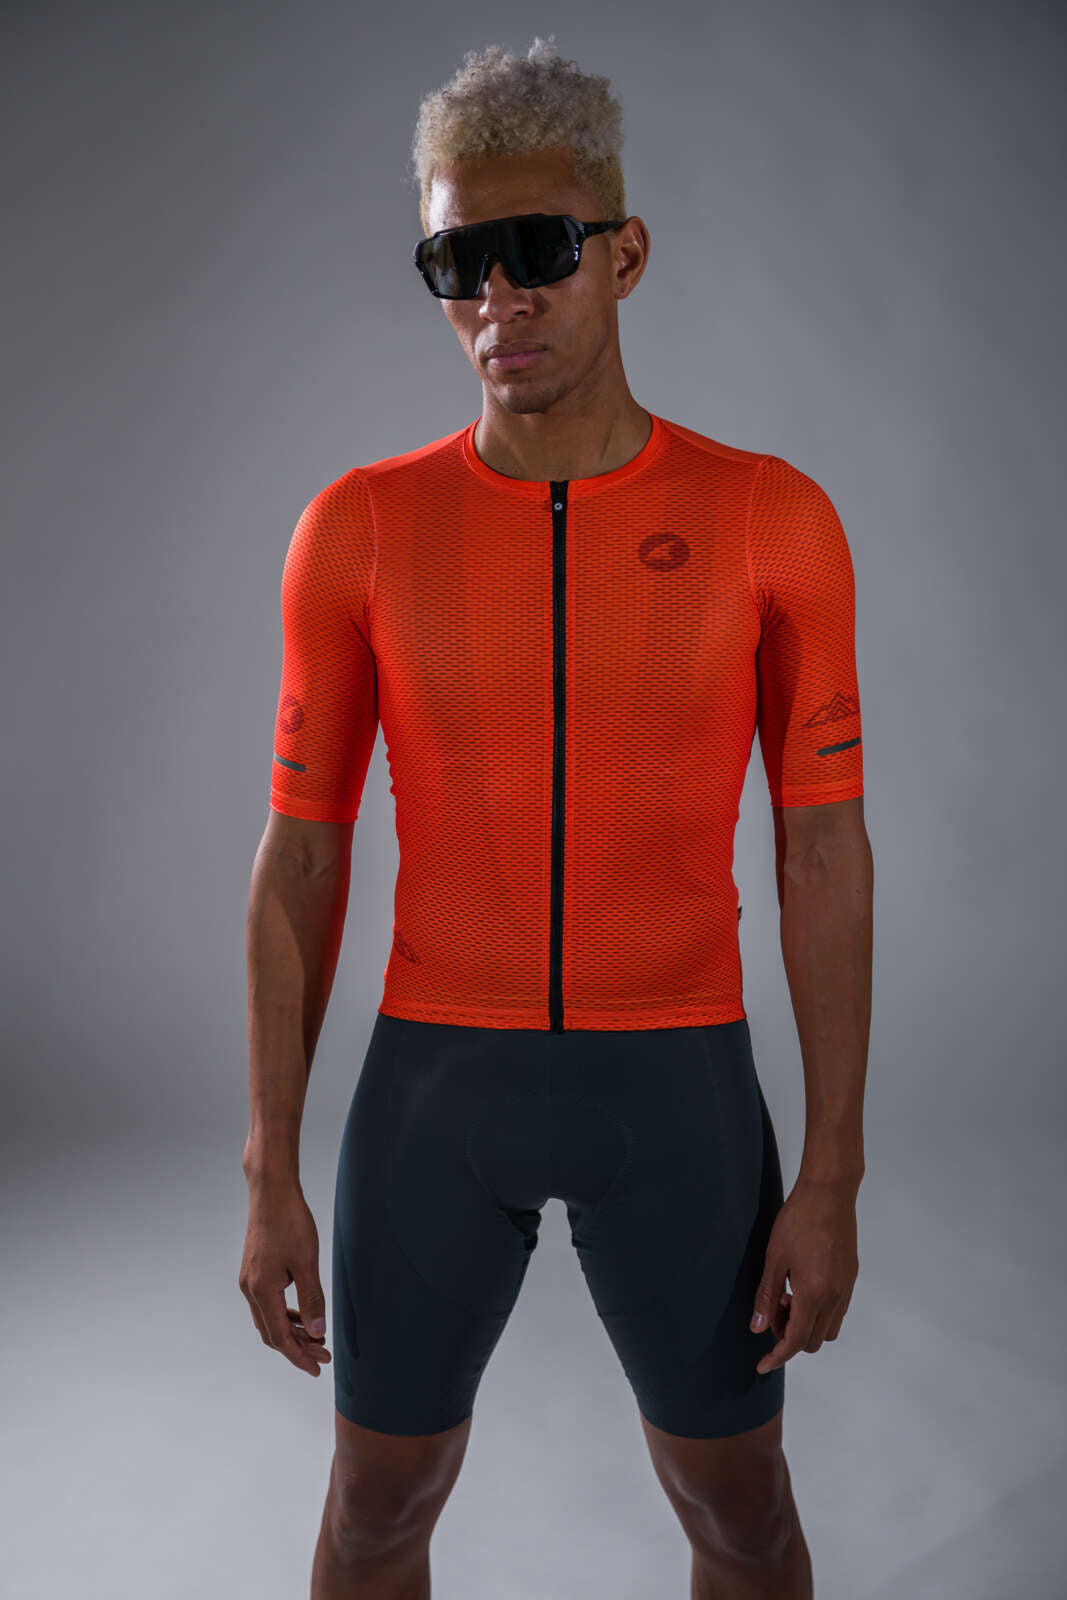 Men's Red Orange Aero Mesh Cycling Jersey - Sunglasses